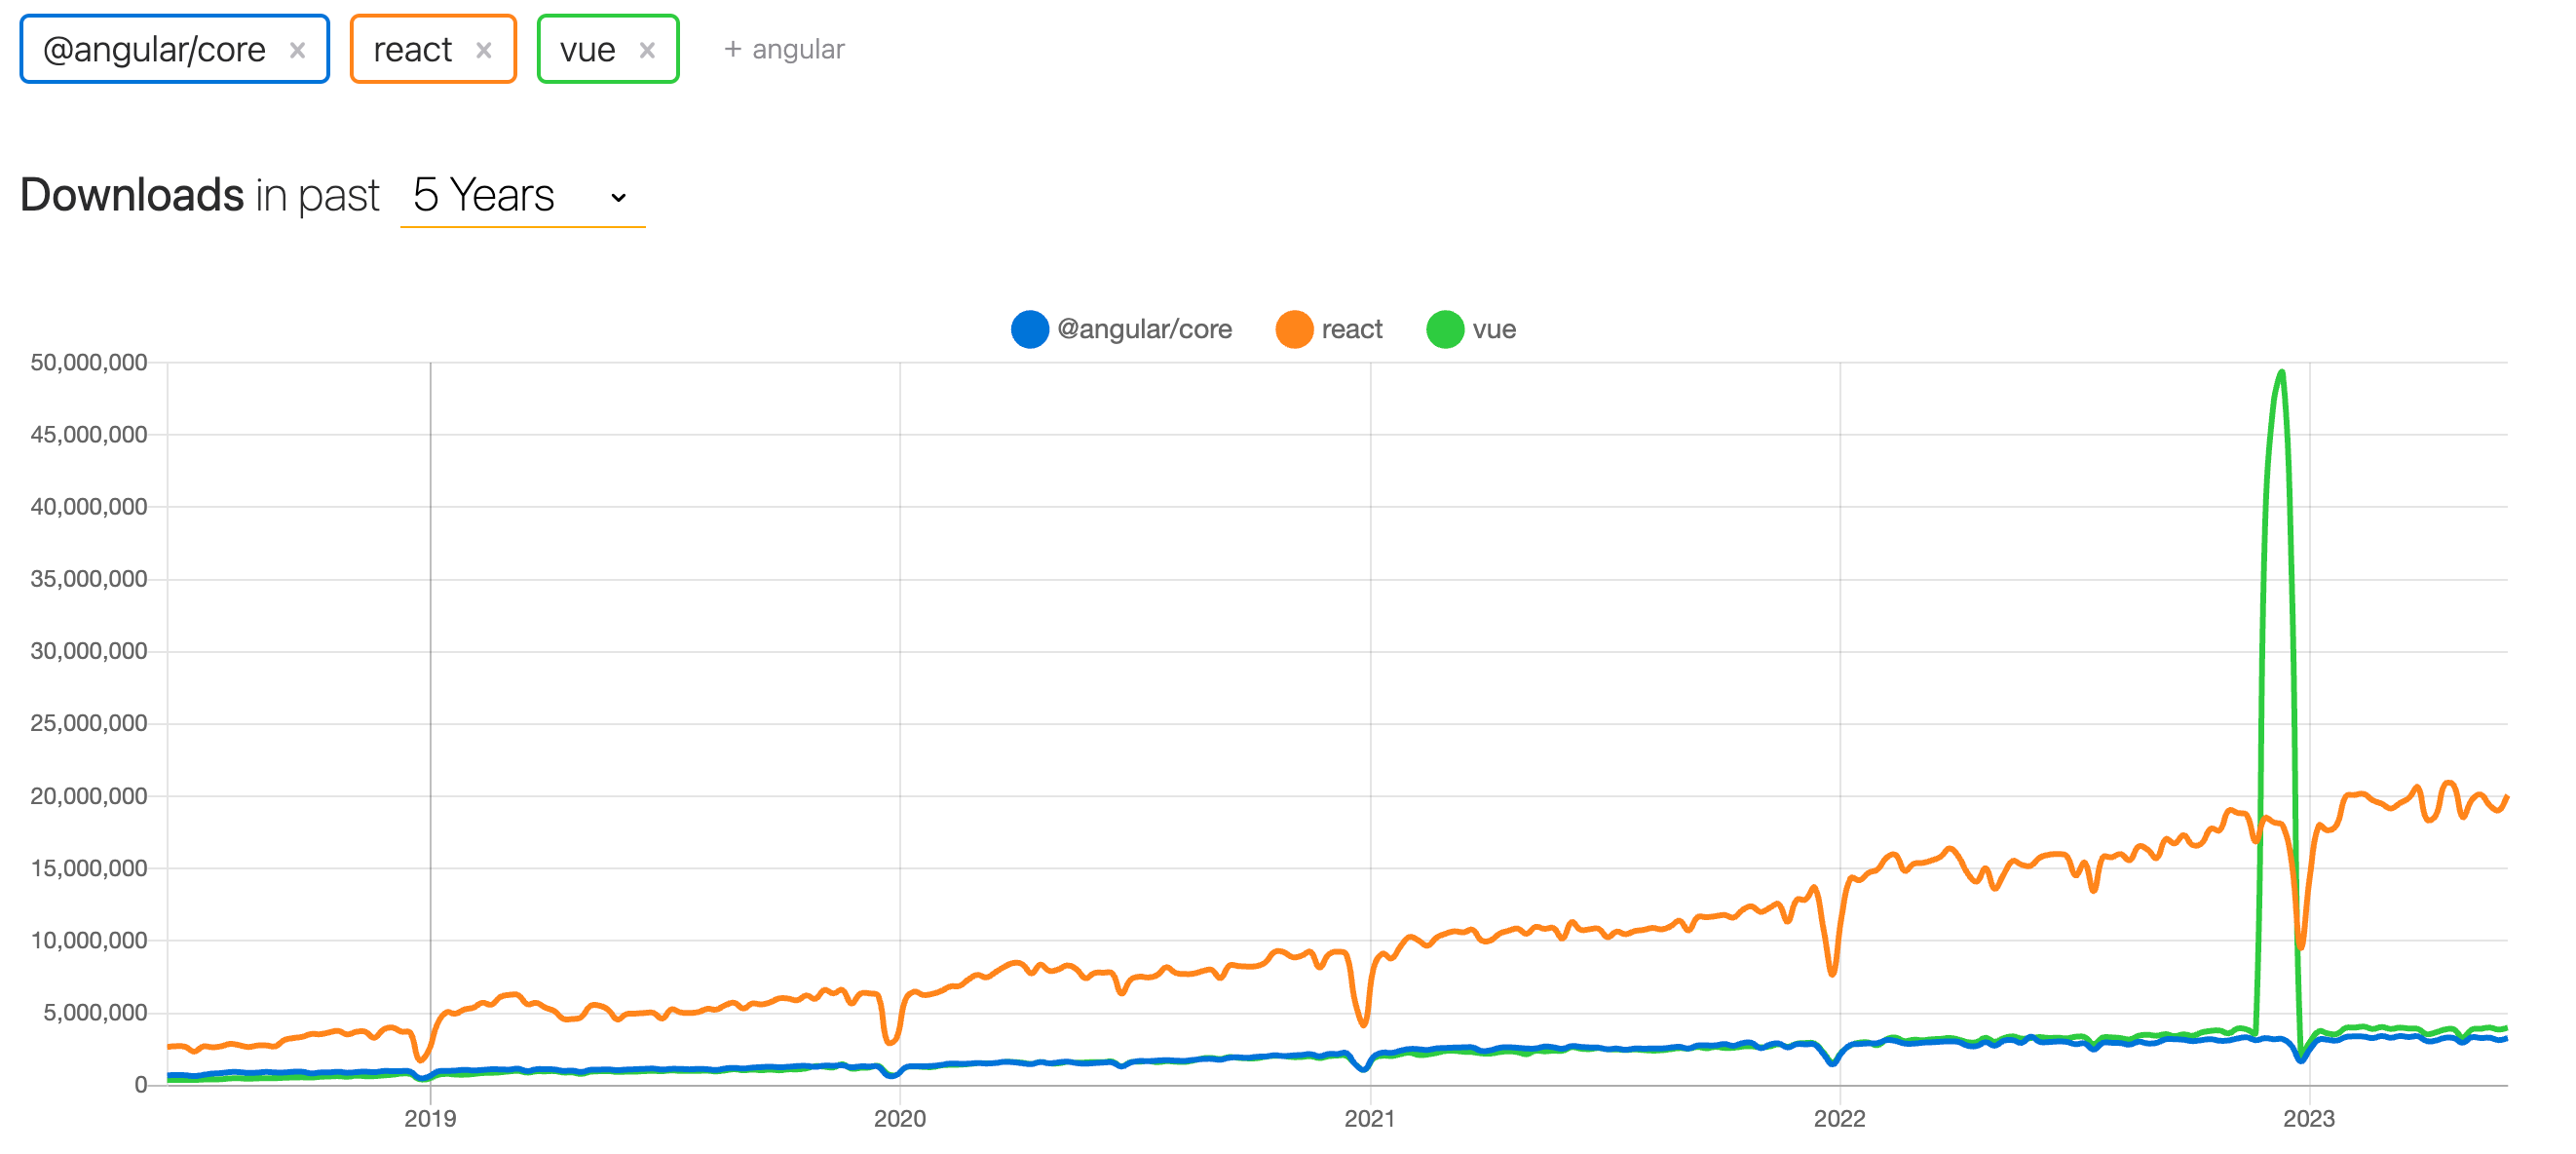 react vs angular vs vue search trends